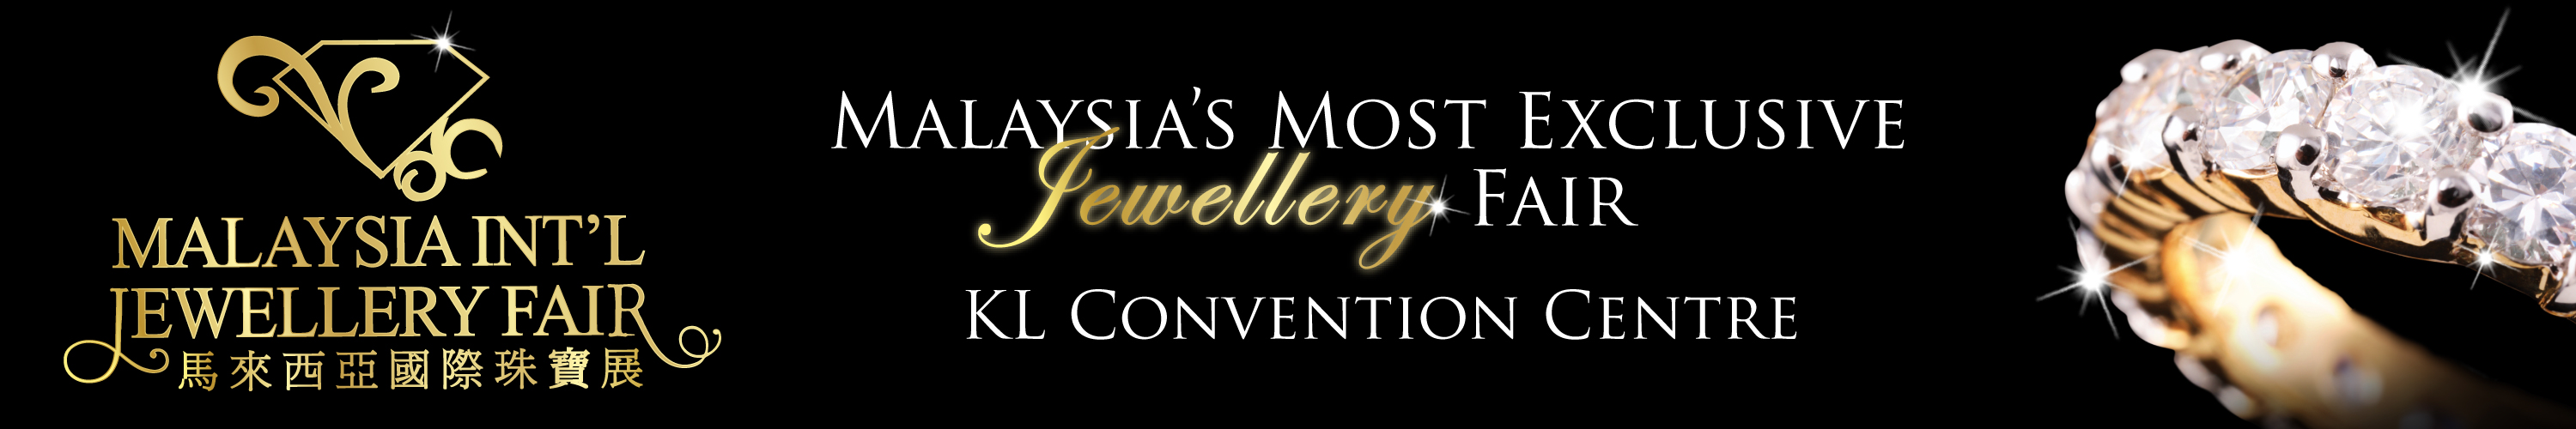 Malaysia International Jewellery Fair (MIJF) 2020, Kuala Lumpur Convention Centre, Kuala Lumpur, Malaysia